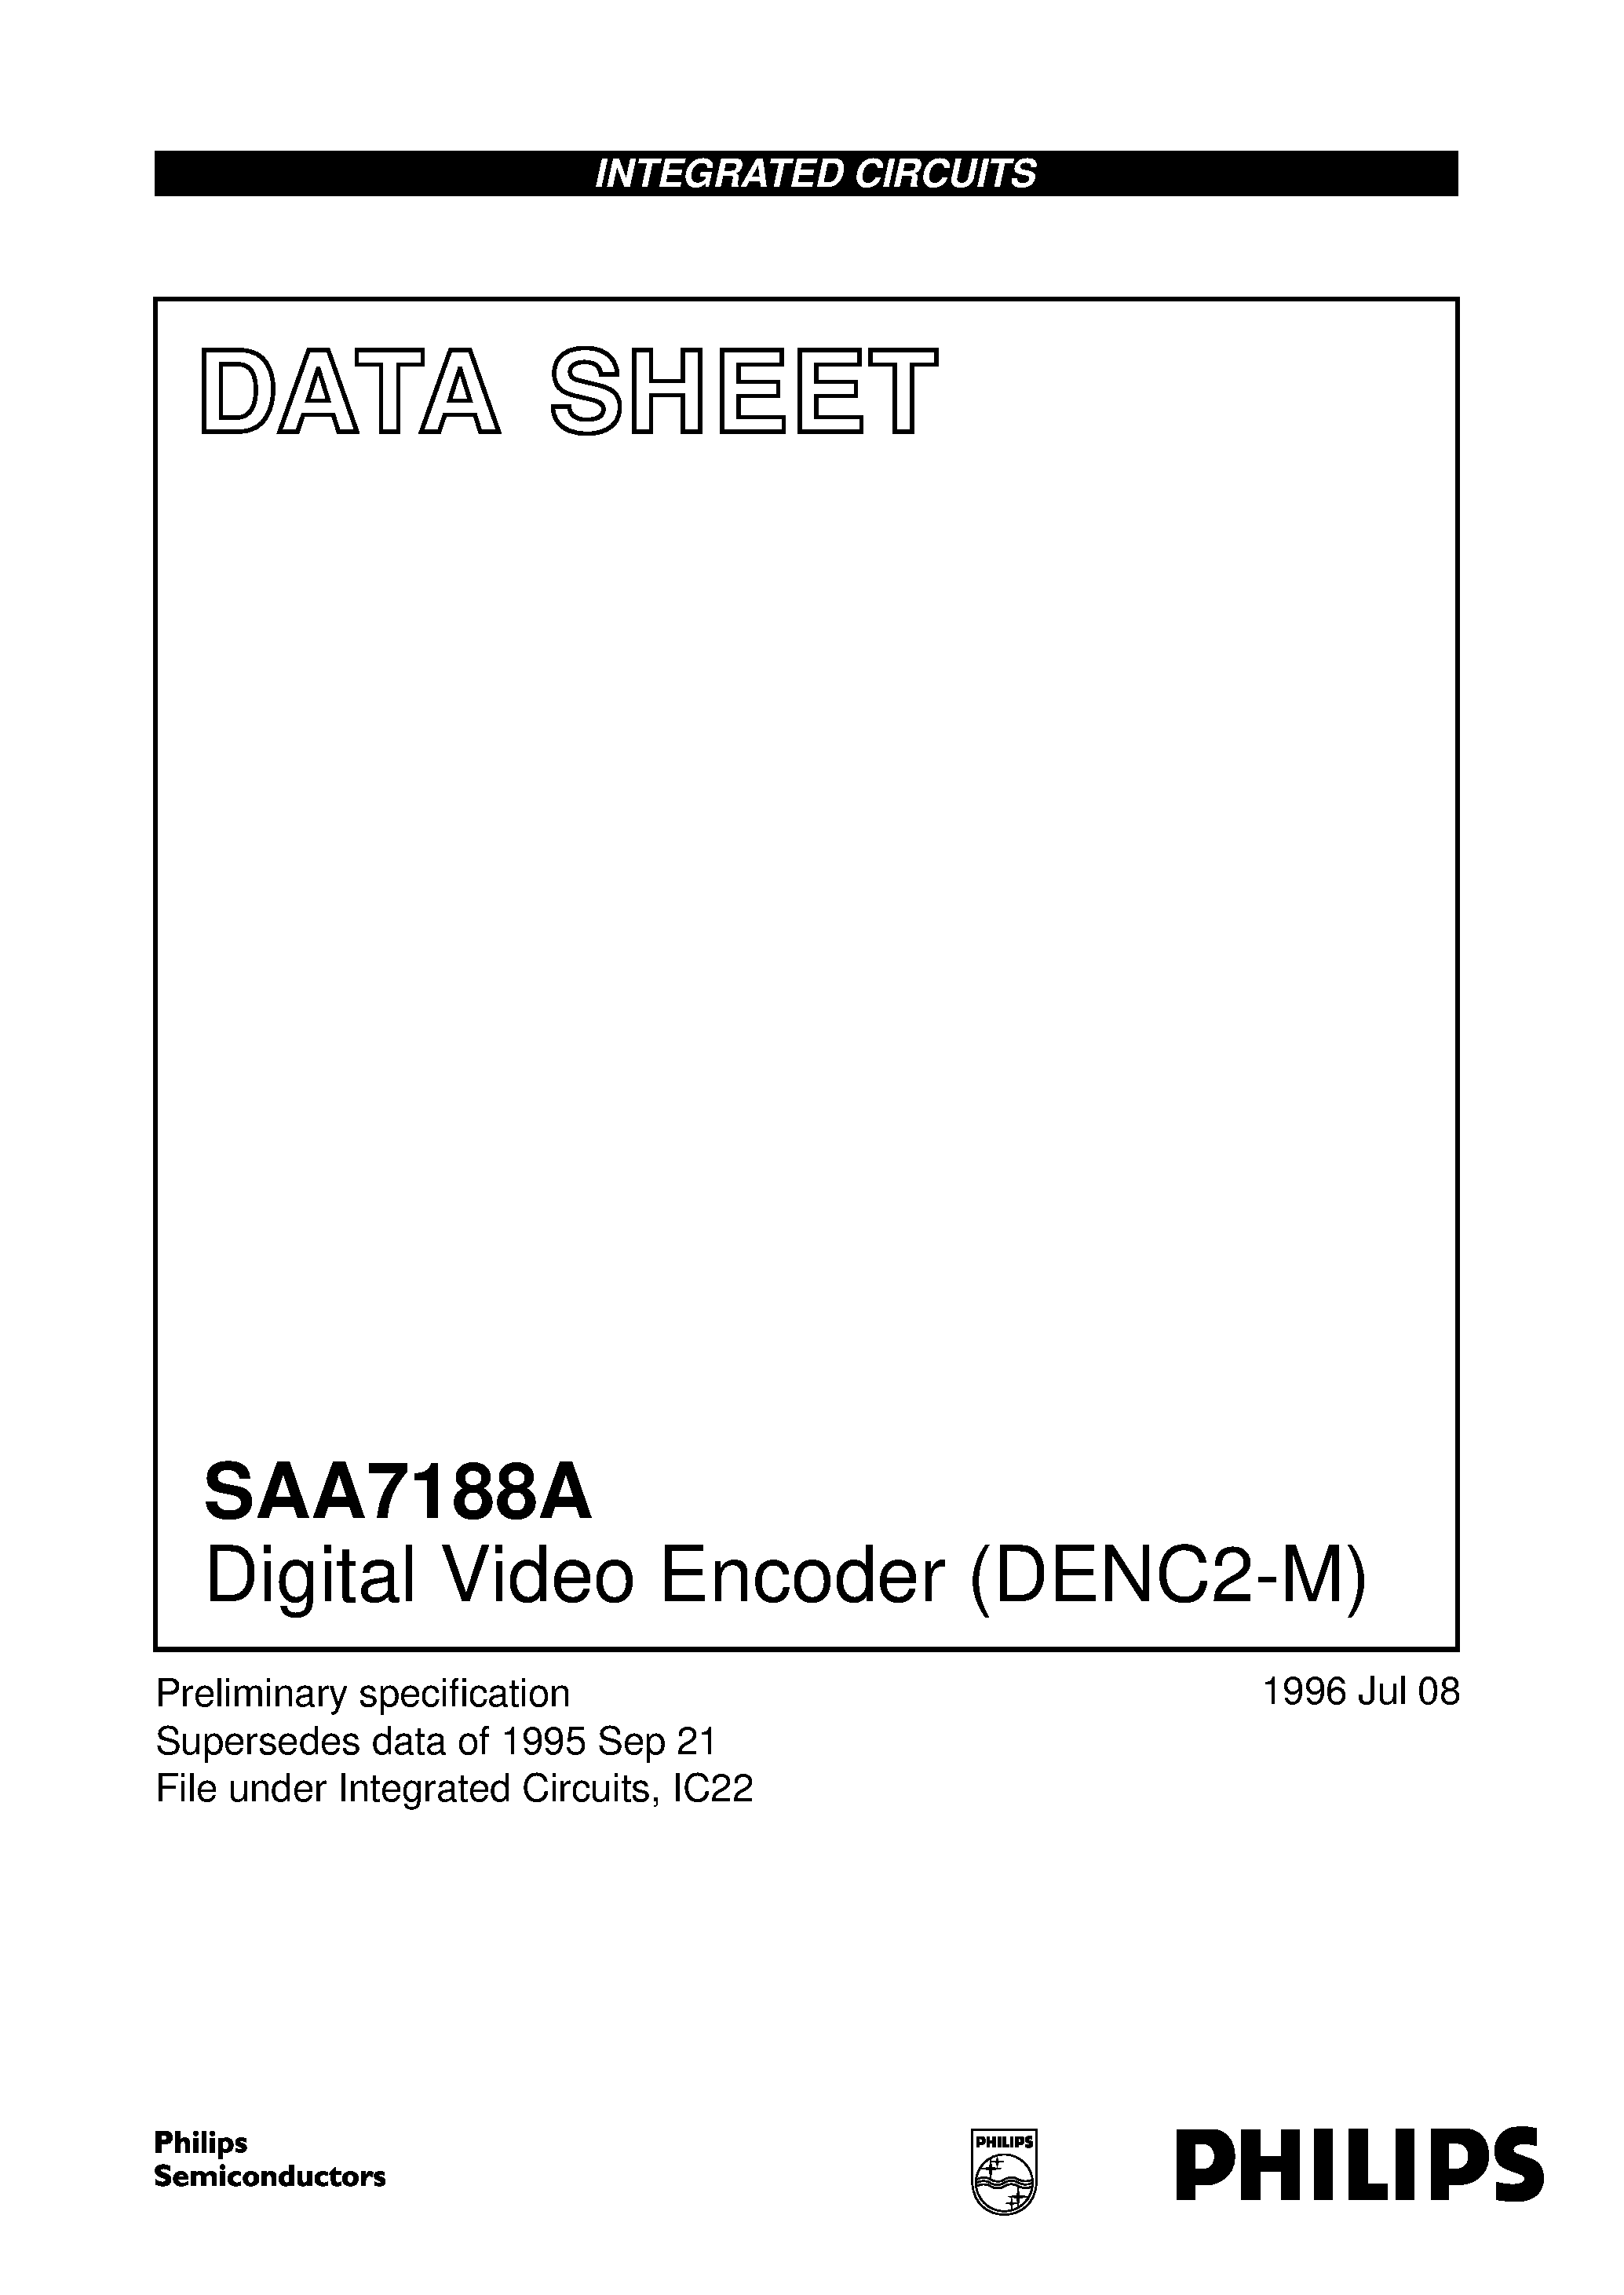 Datasheet SAA7188A - Digital Video Encoder DENC2-M page 1